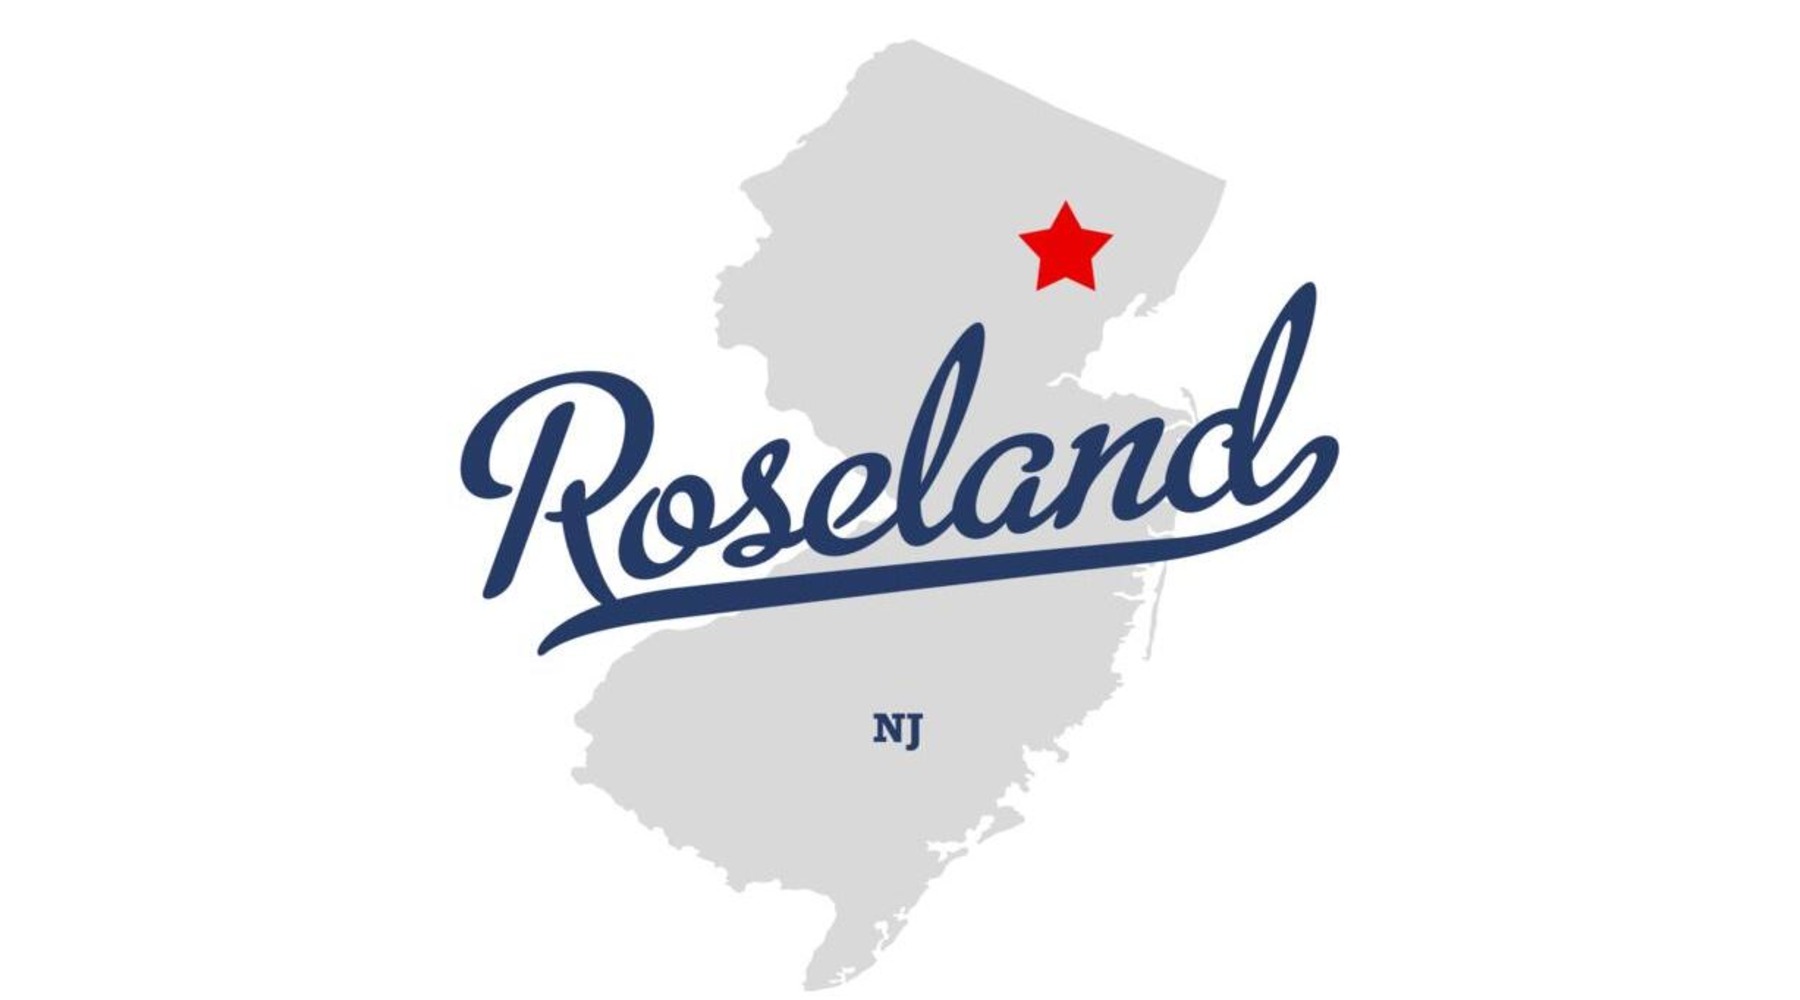 Roseland, 07068